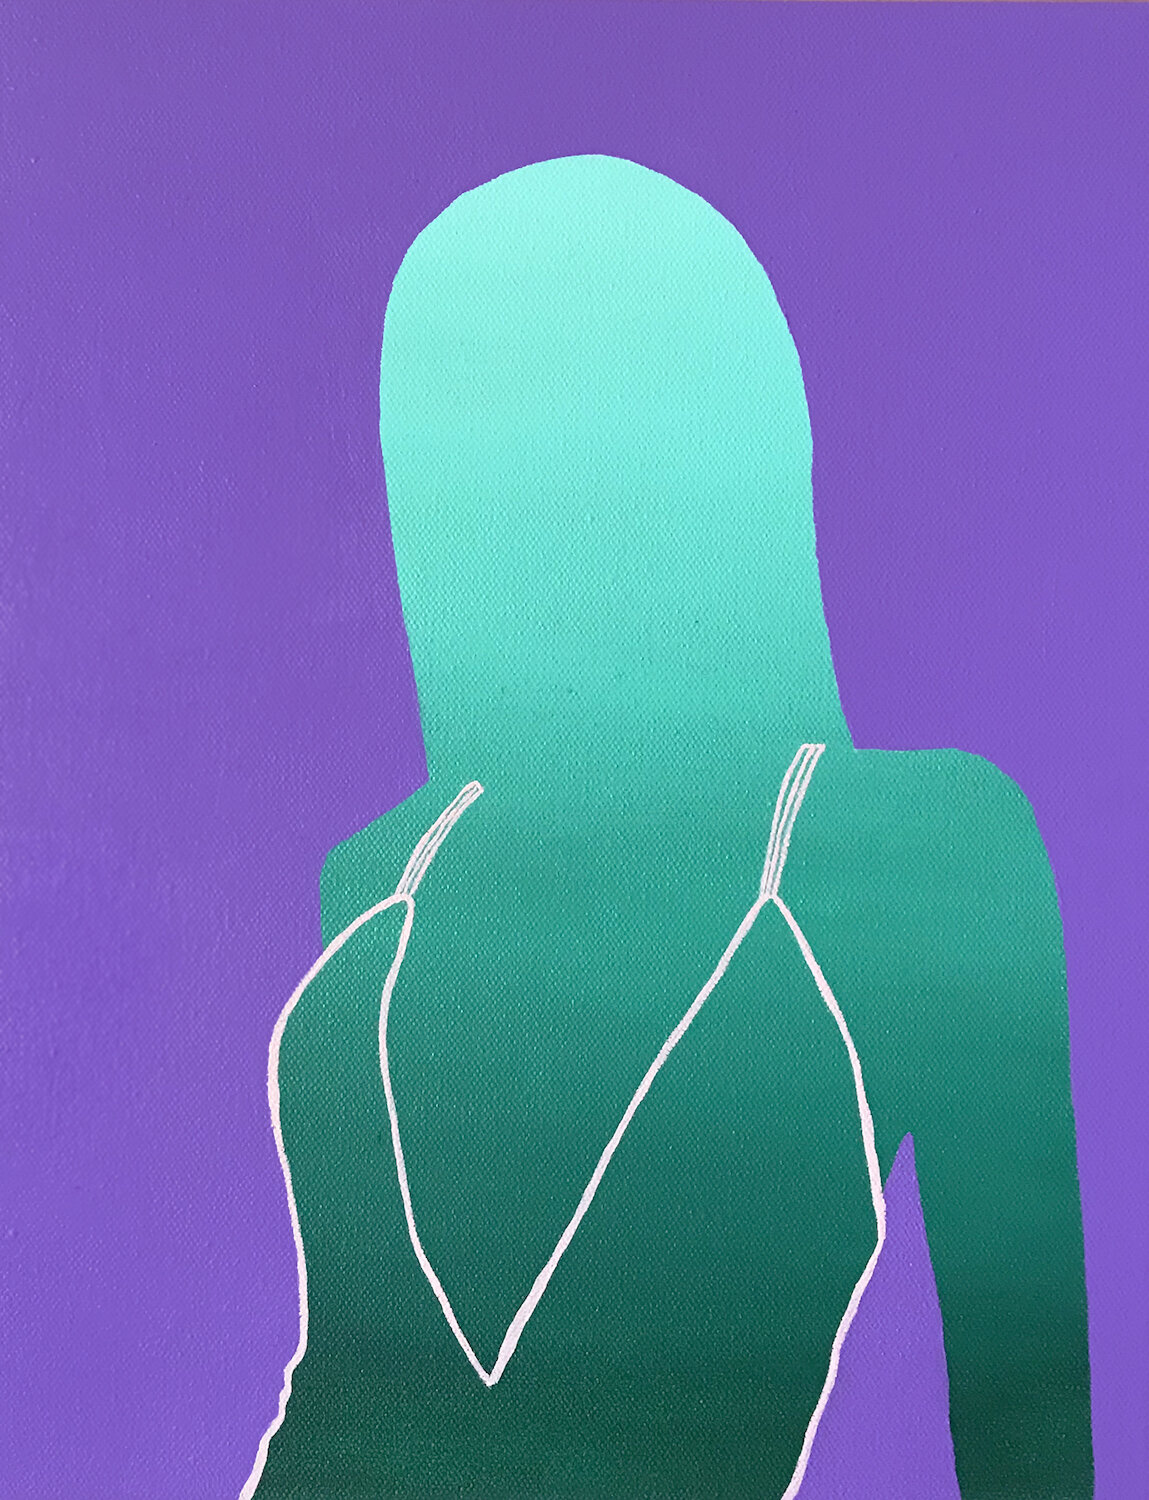    Cover Girl no. 6  , acrylic on canvas, 14” x 11” 